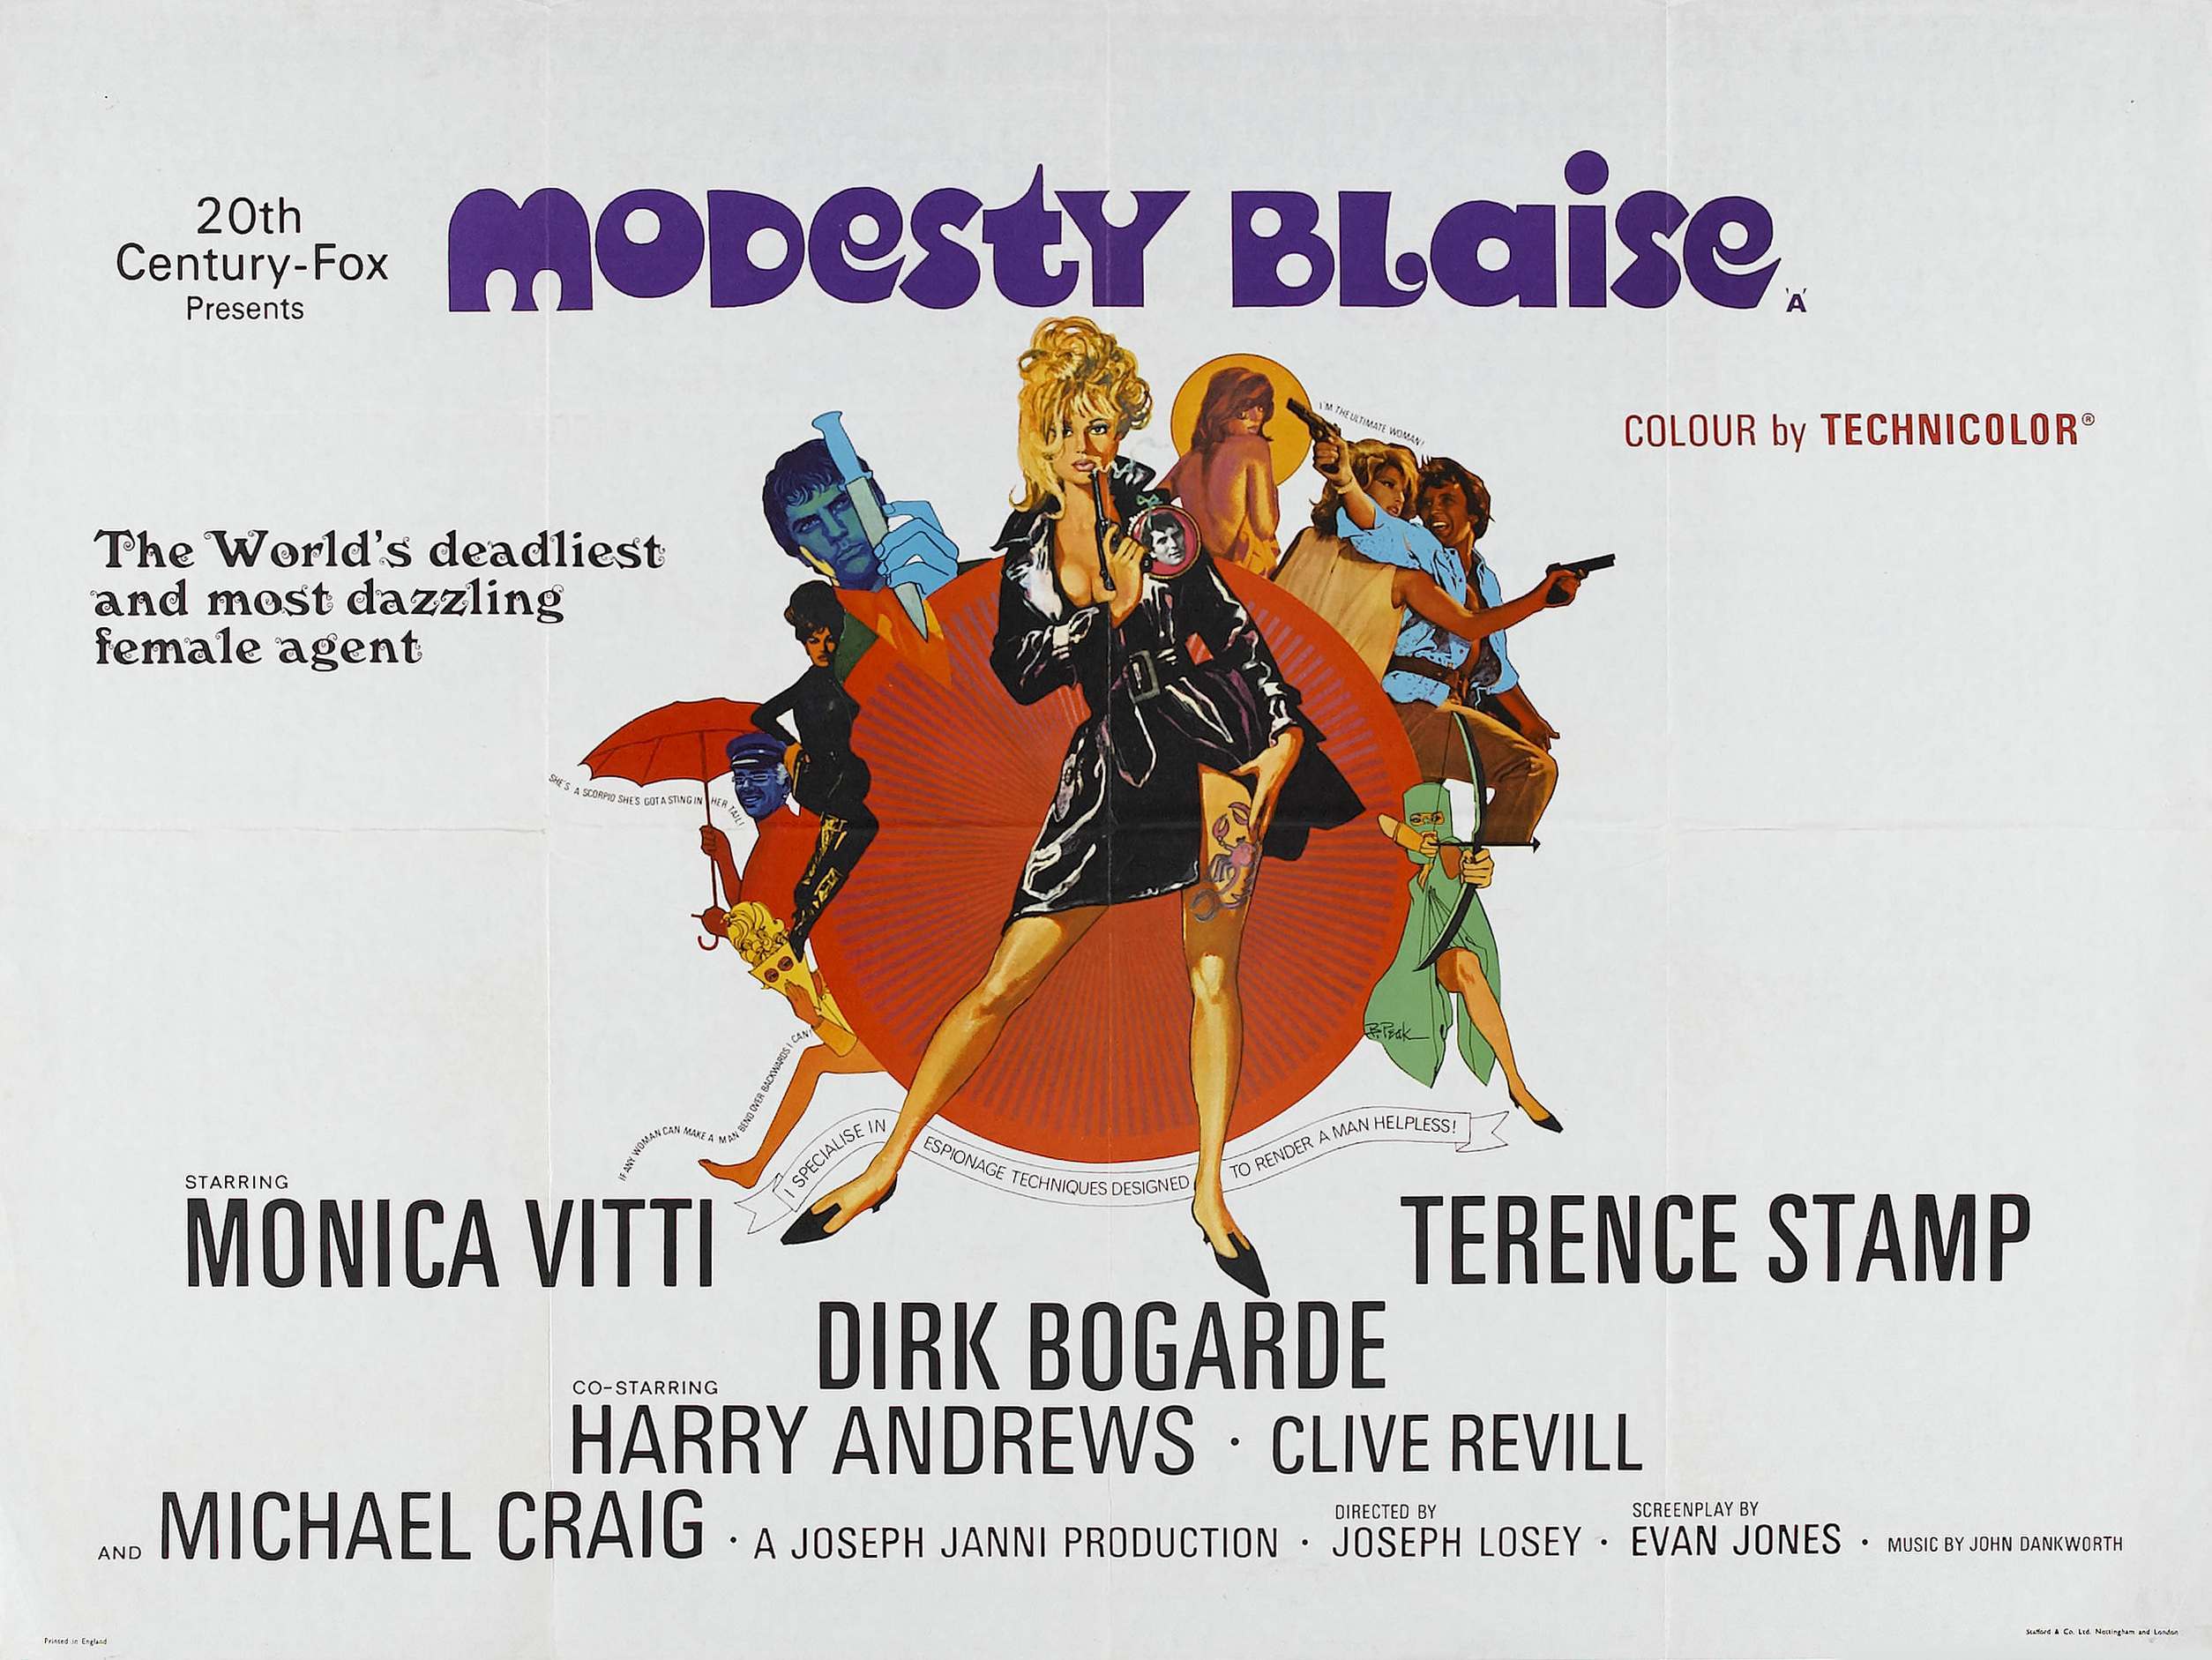 Modesty Blaise poster